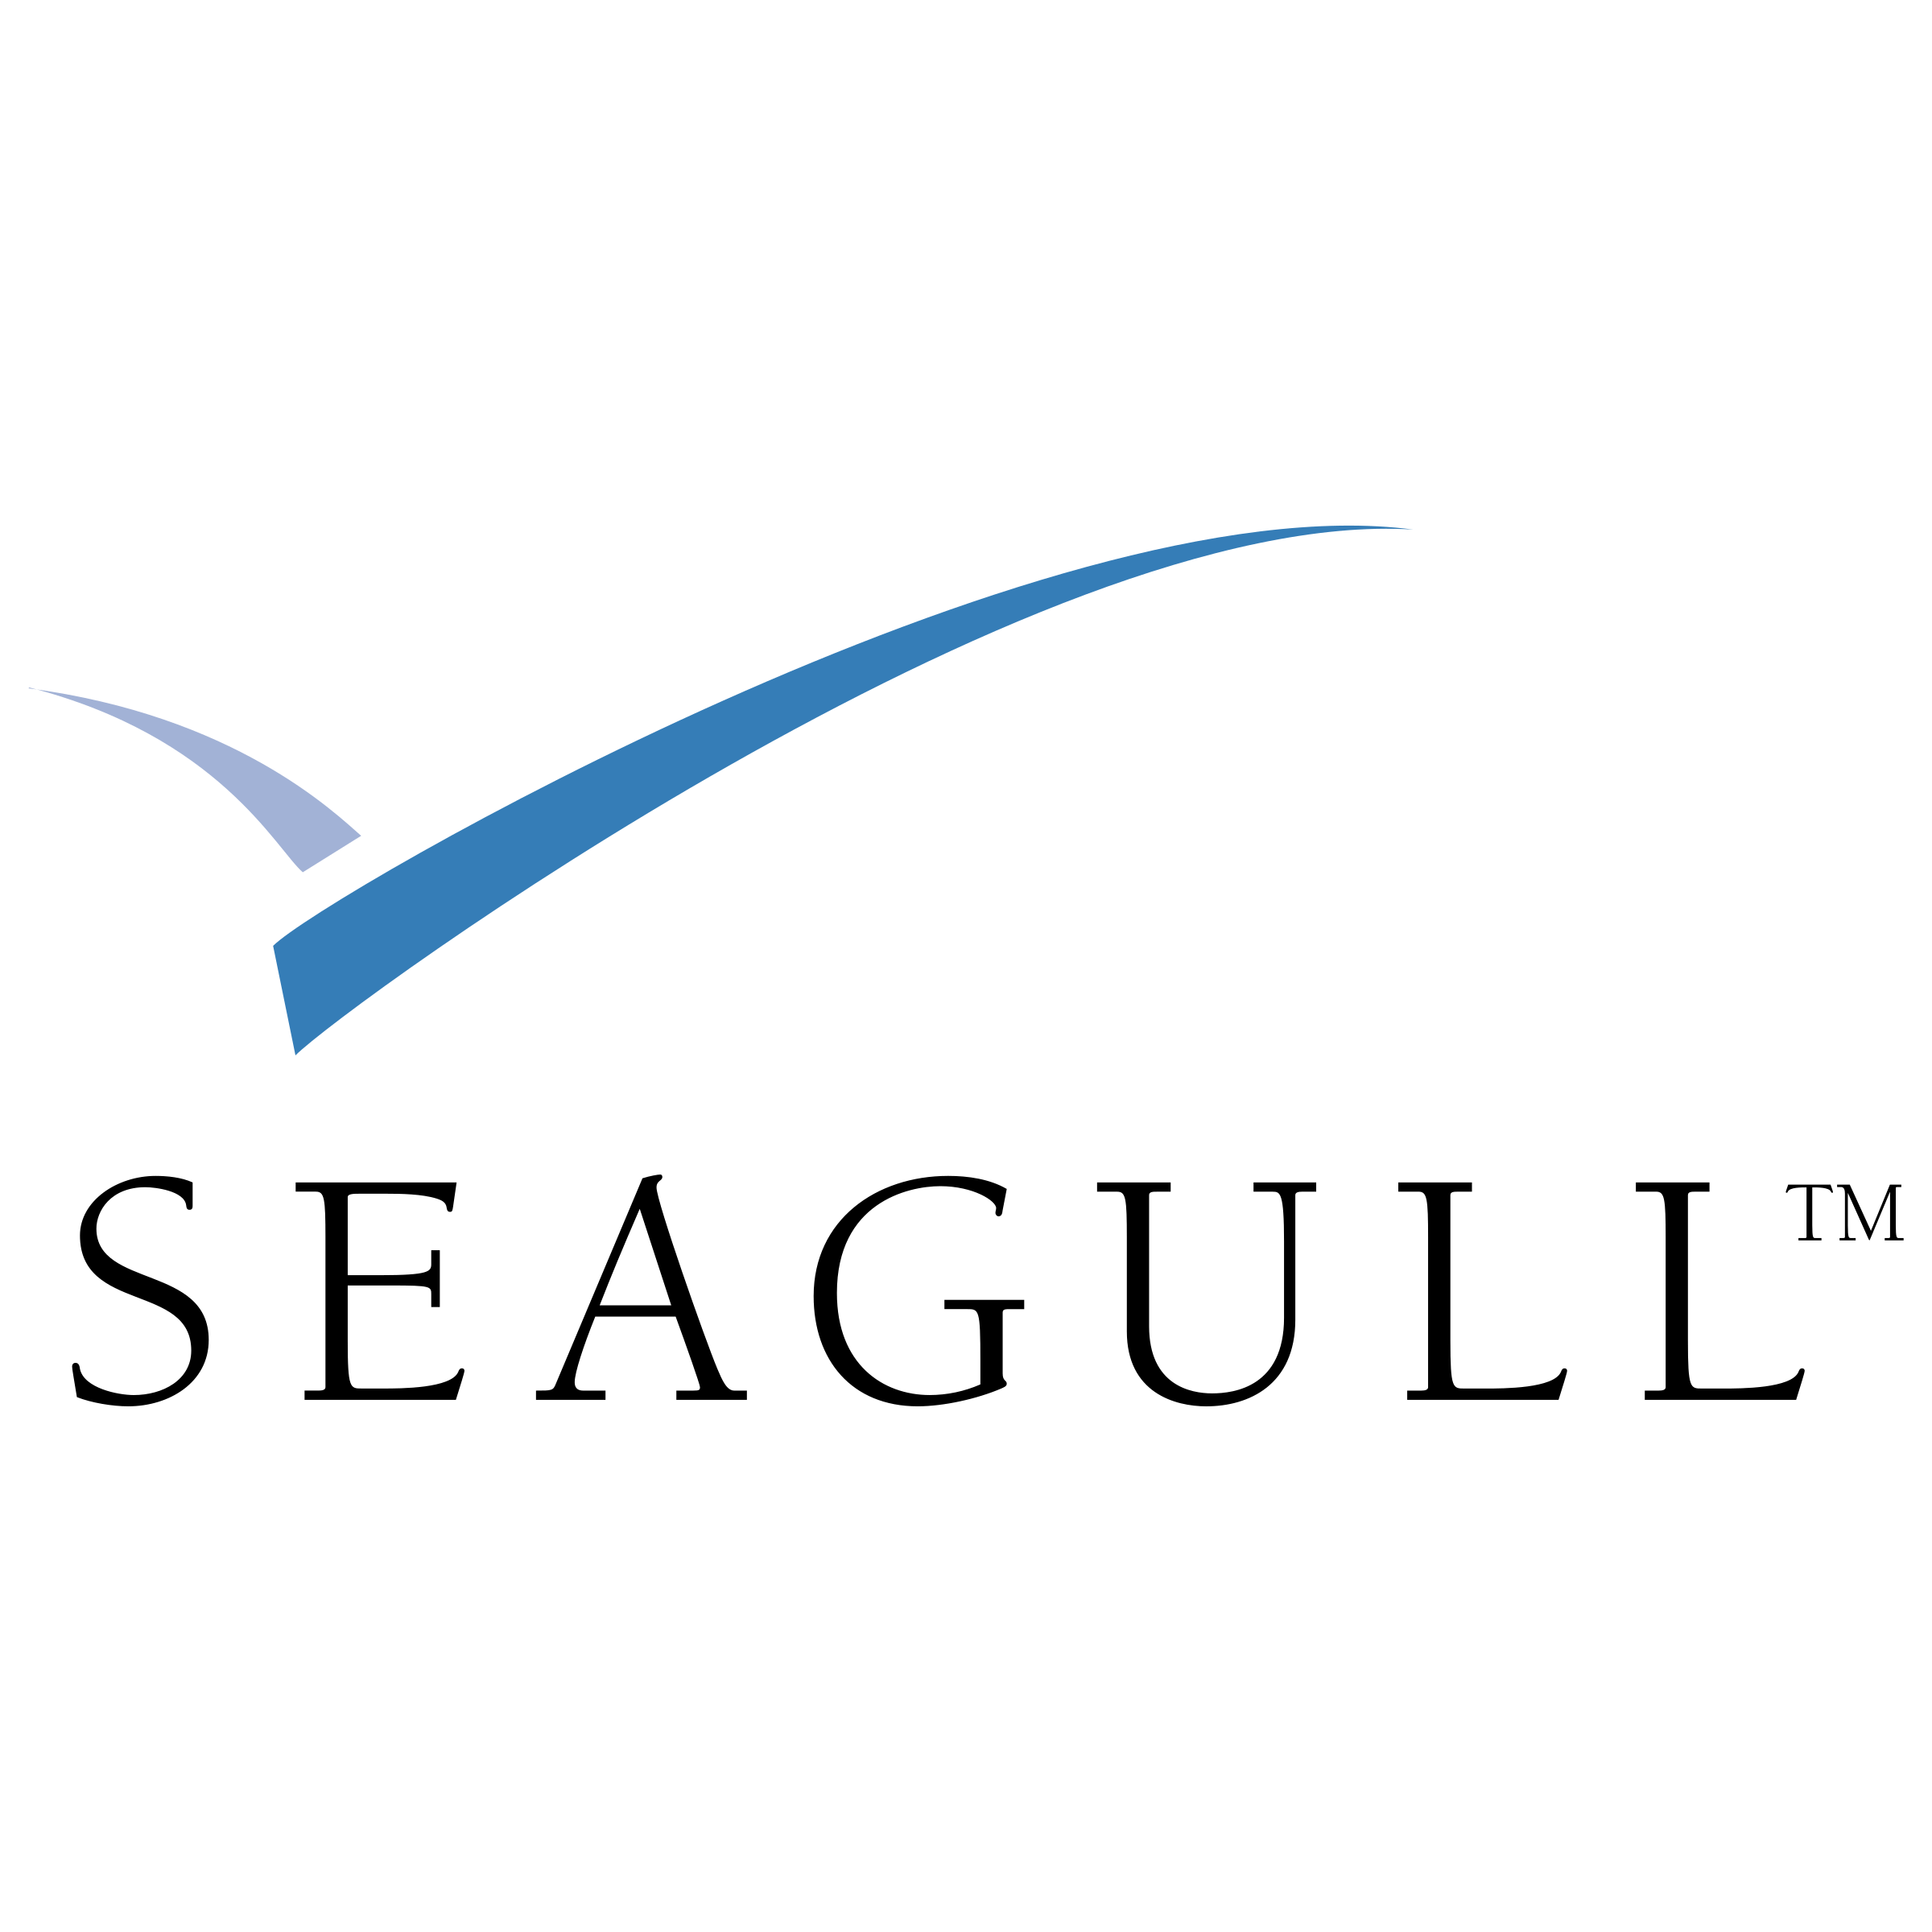 Seagull Logo - Seagull Logo PNG Transparent & SVG Vector